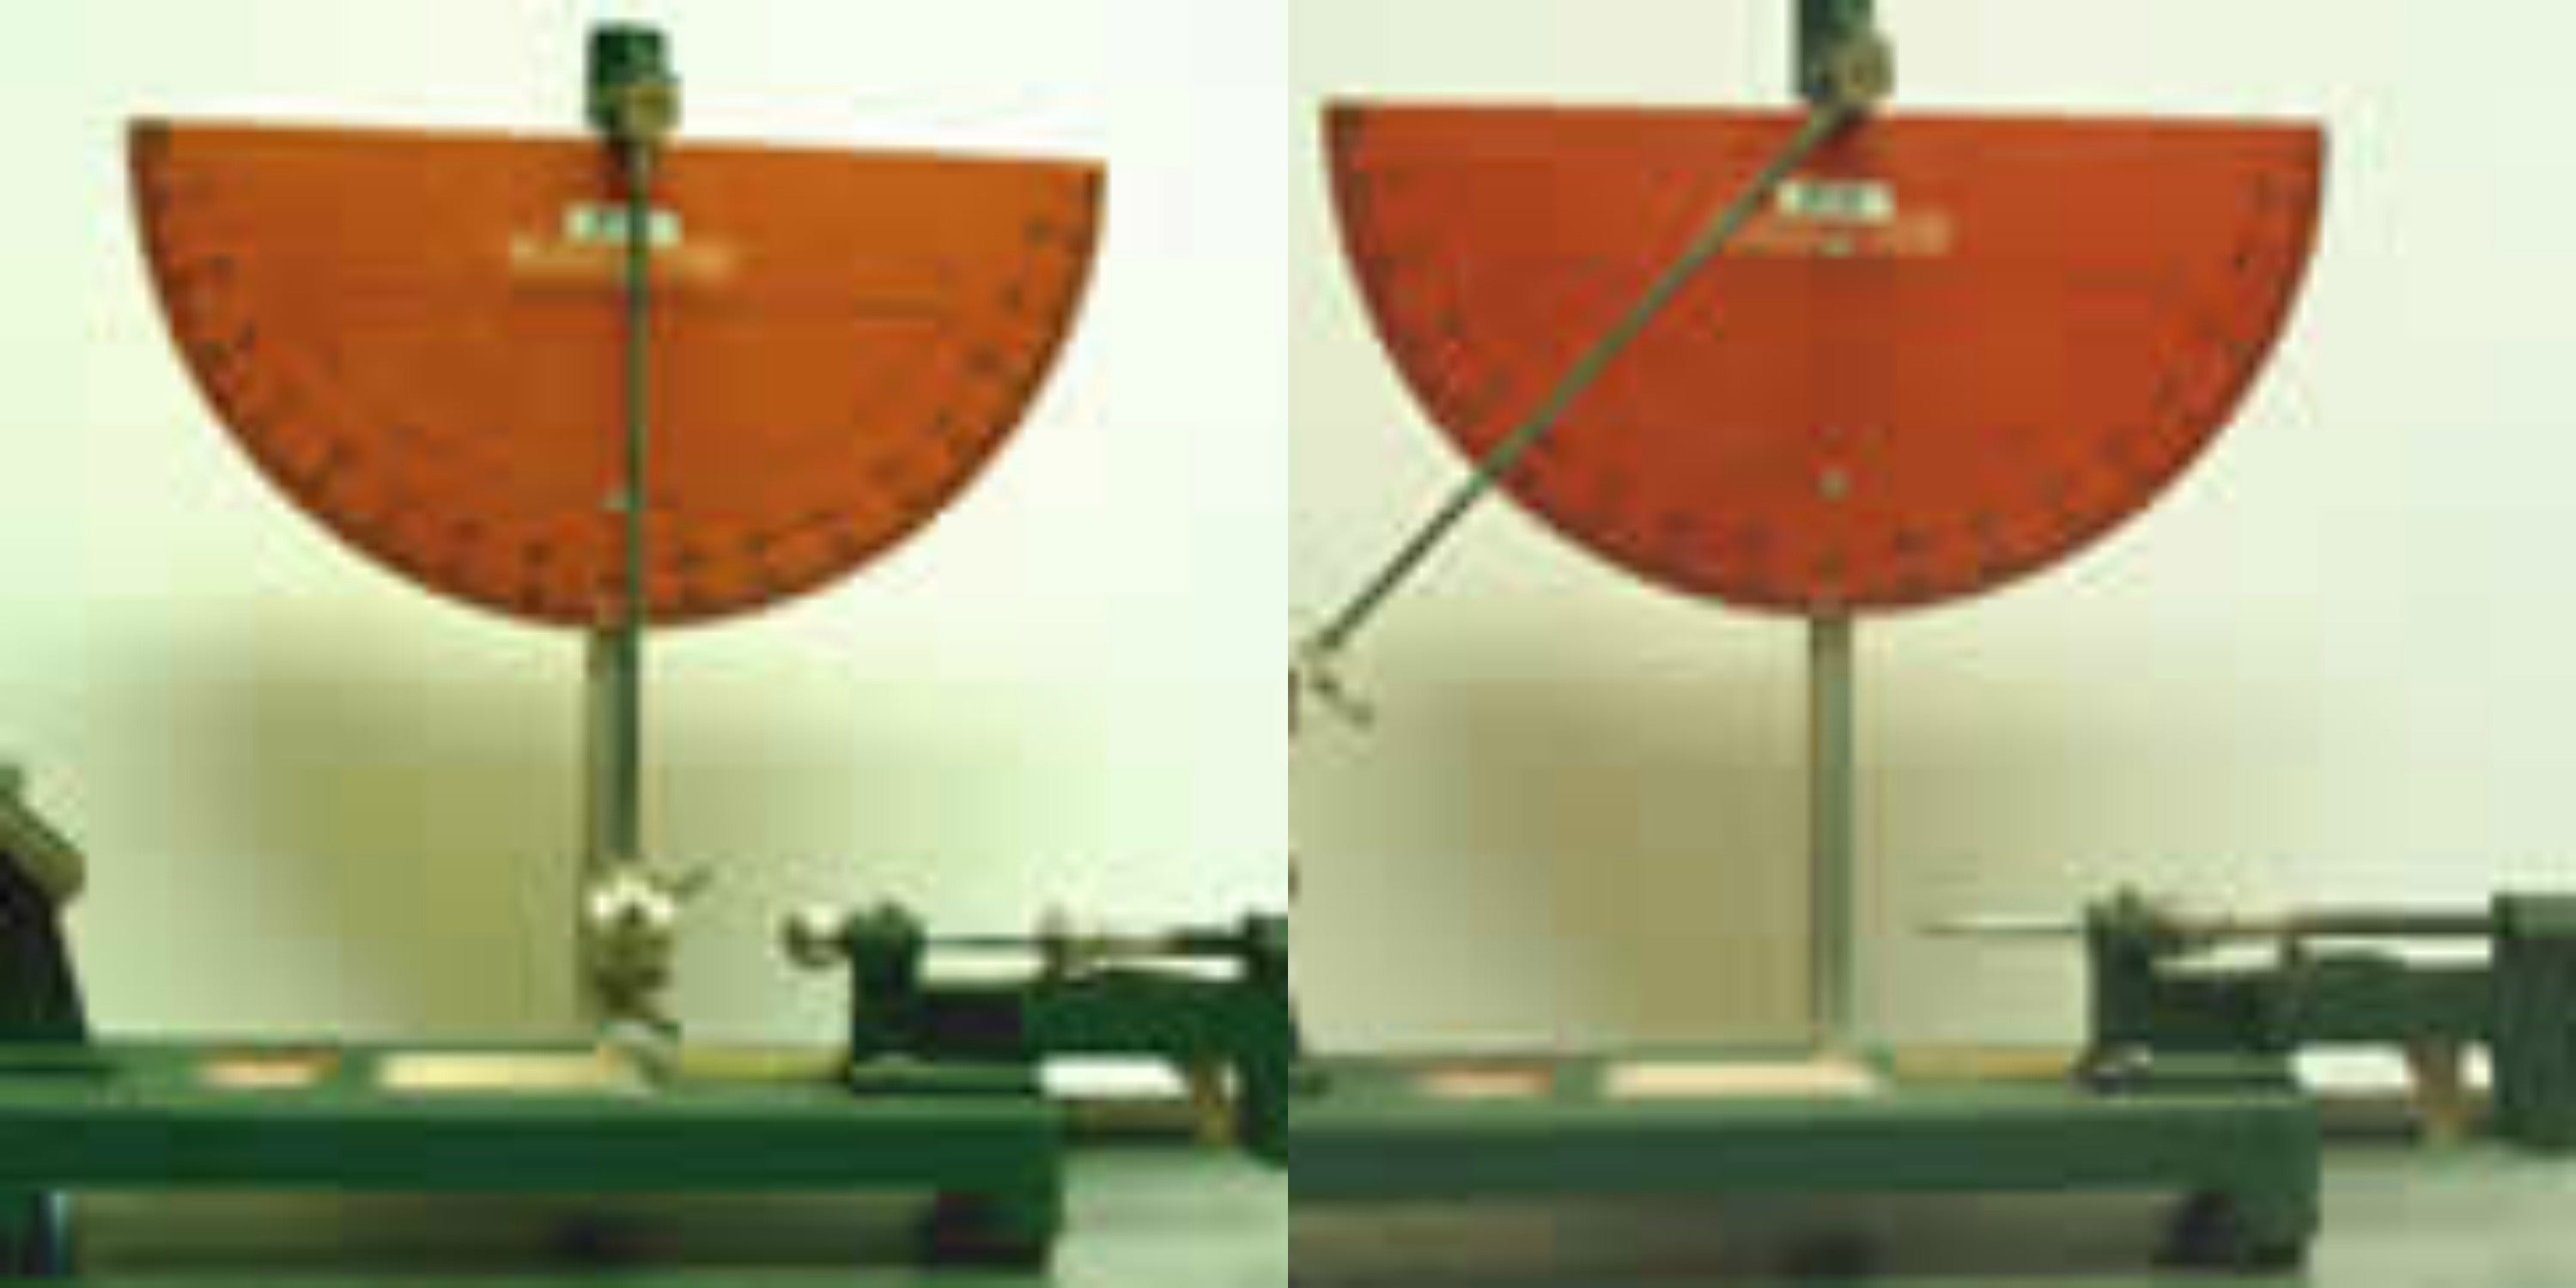 Photograph of ballistic pendulum